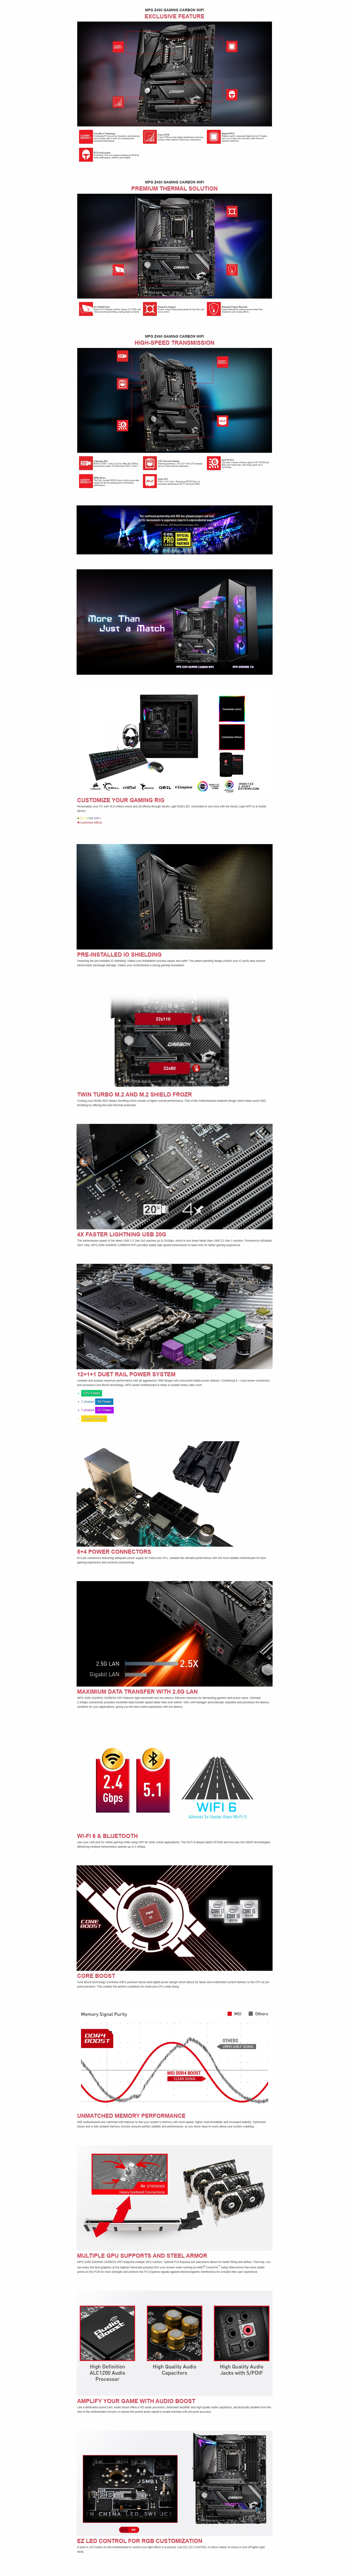 Buy Now Msi Mpg Z490 Gaming Carbon Wifi Lga10 Atx Desktop Motherboard Ple Computers